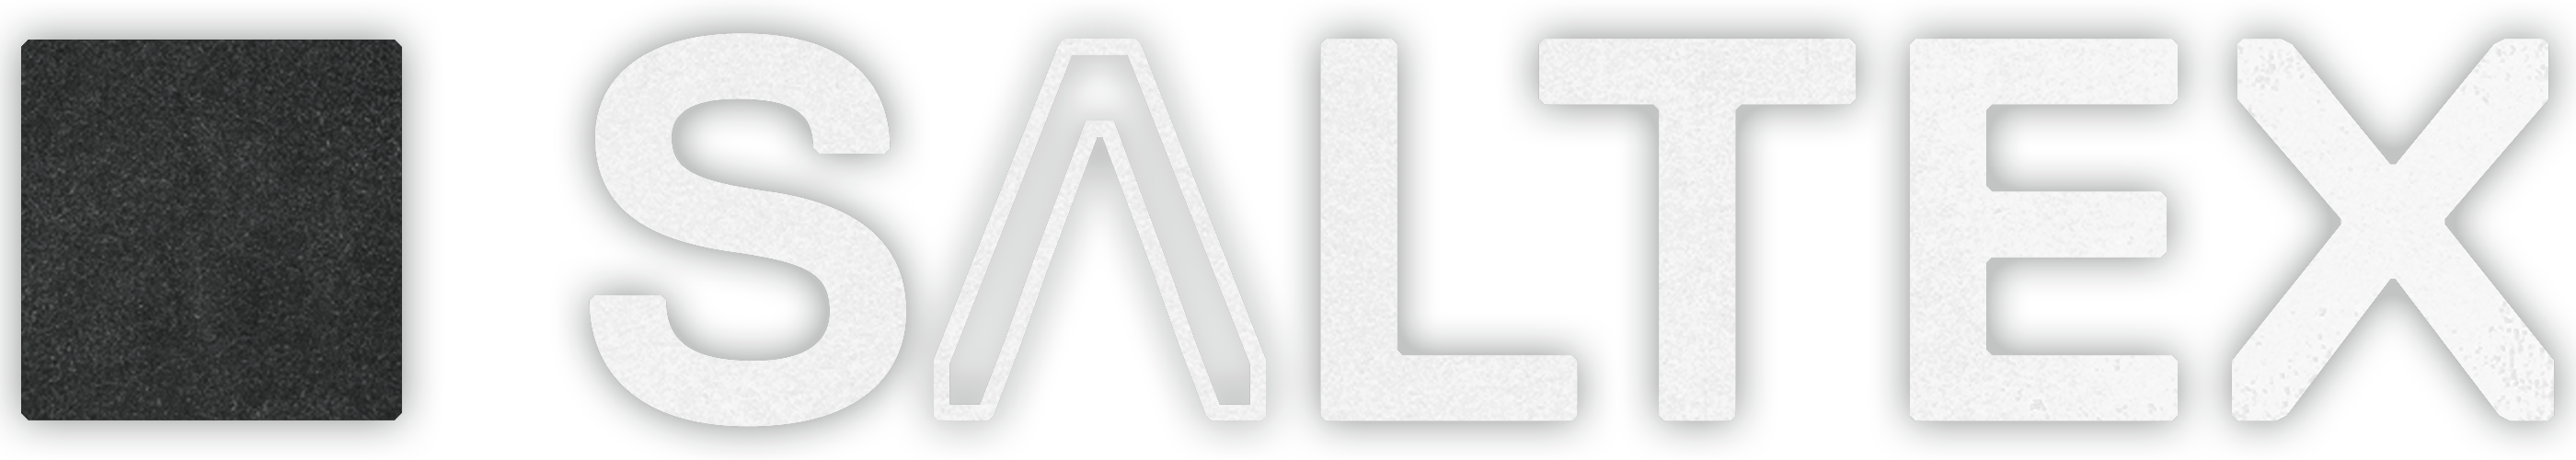 SALTEX logo full